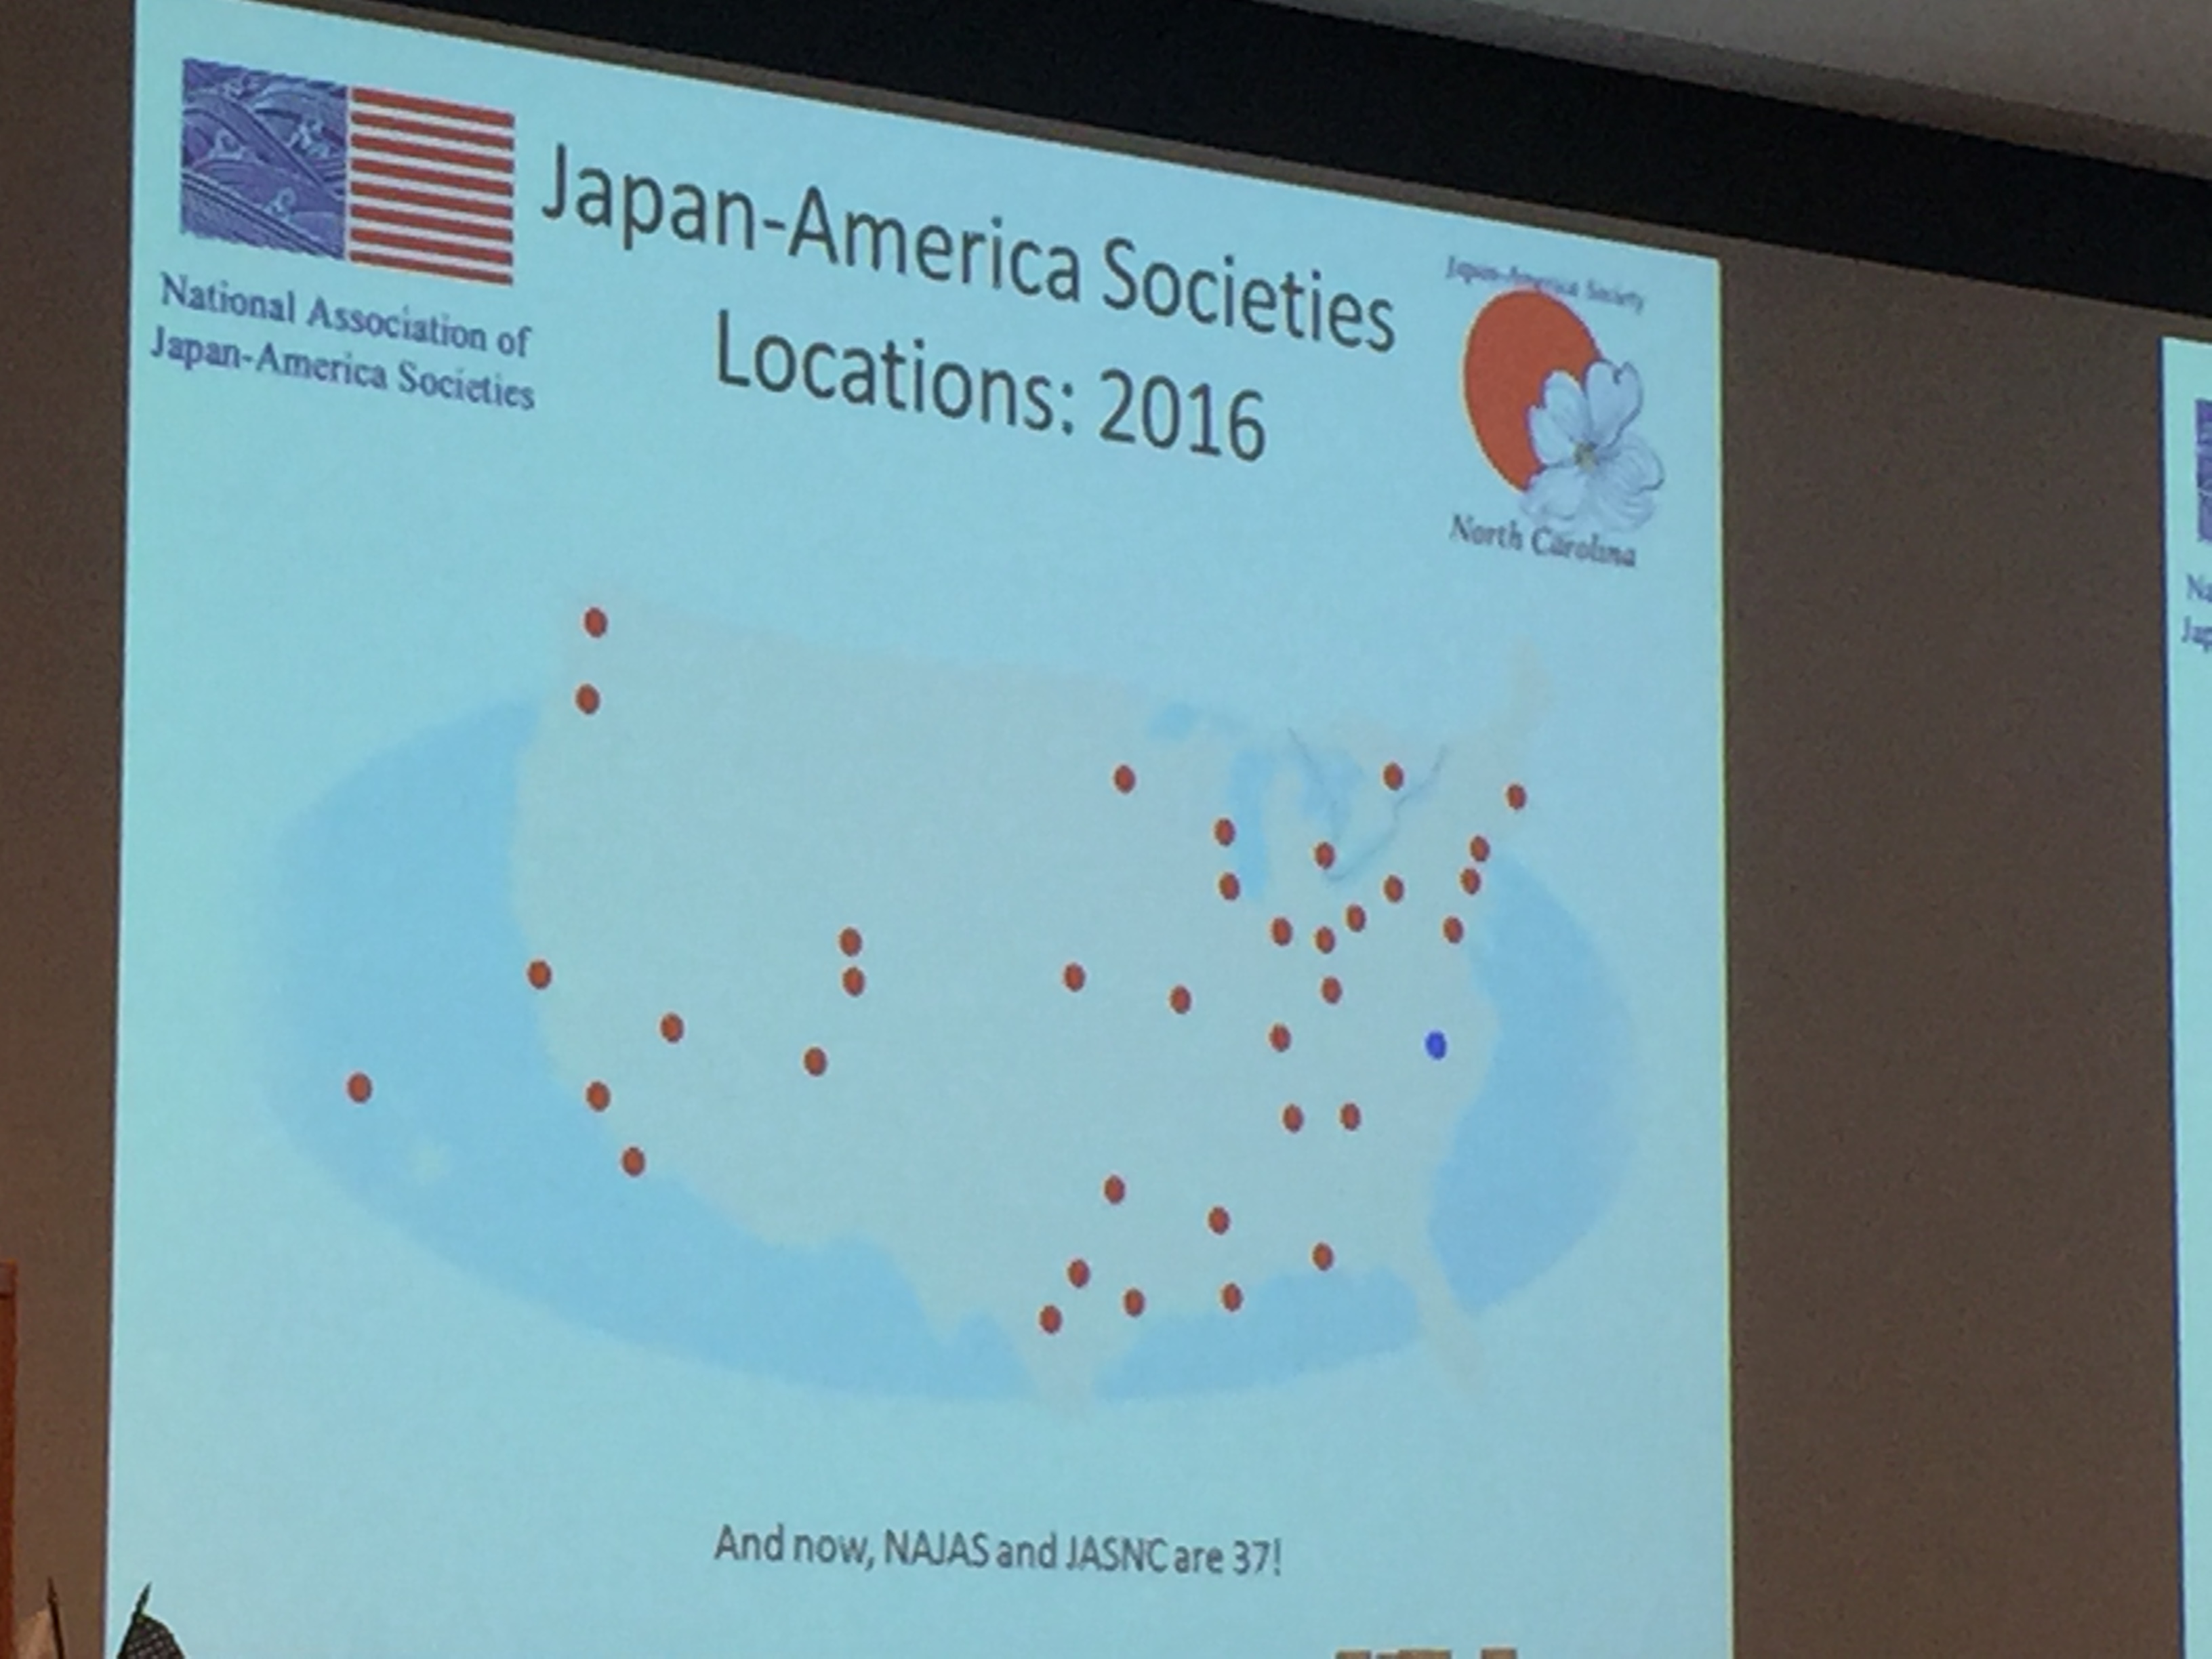 The Japan-America Society of North Carolina (JASNC